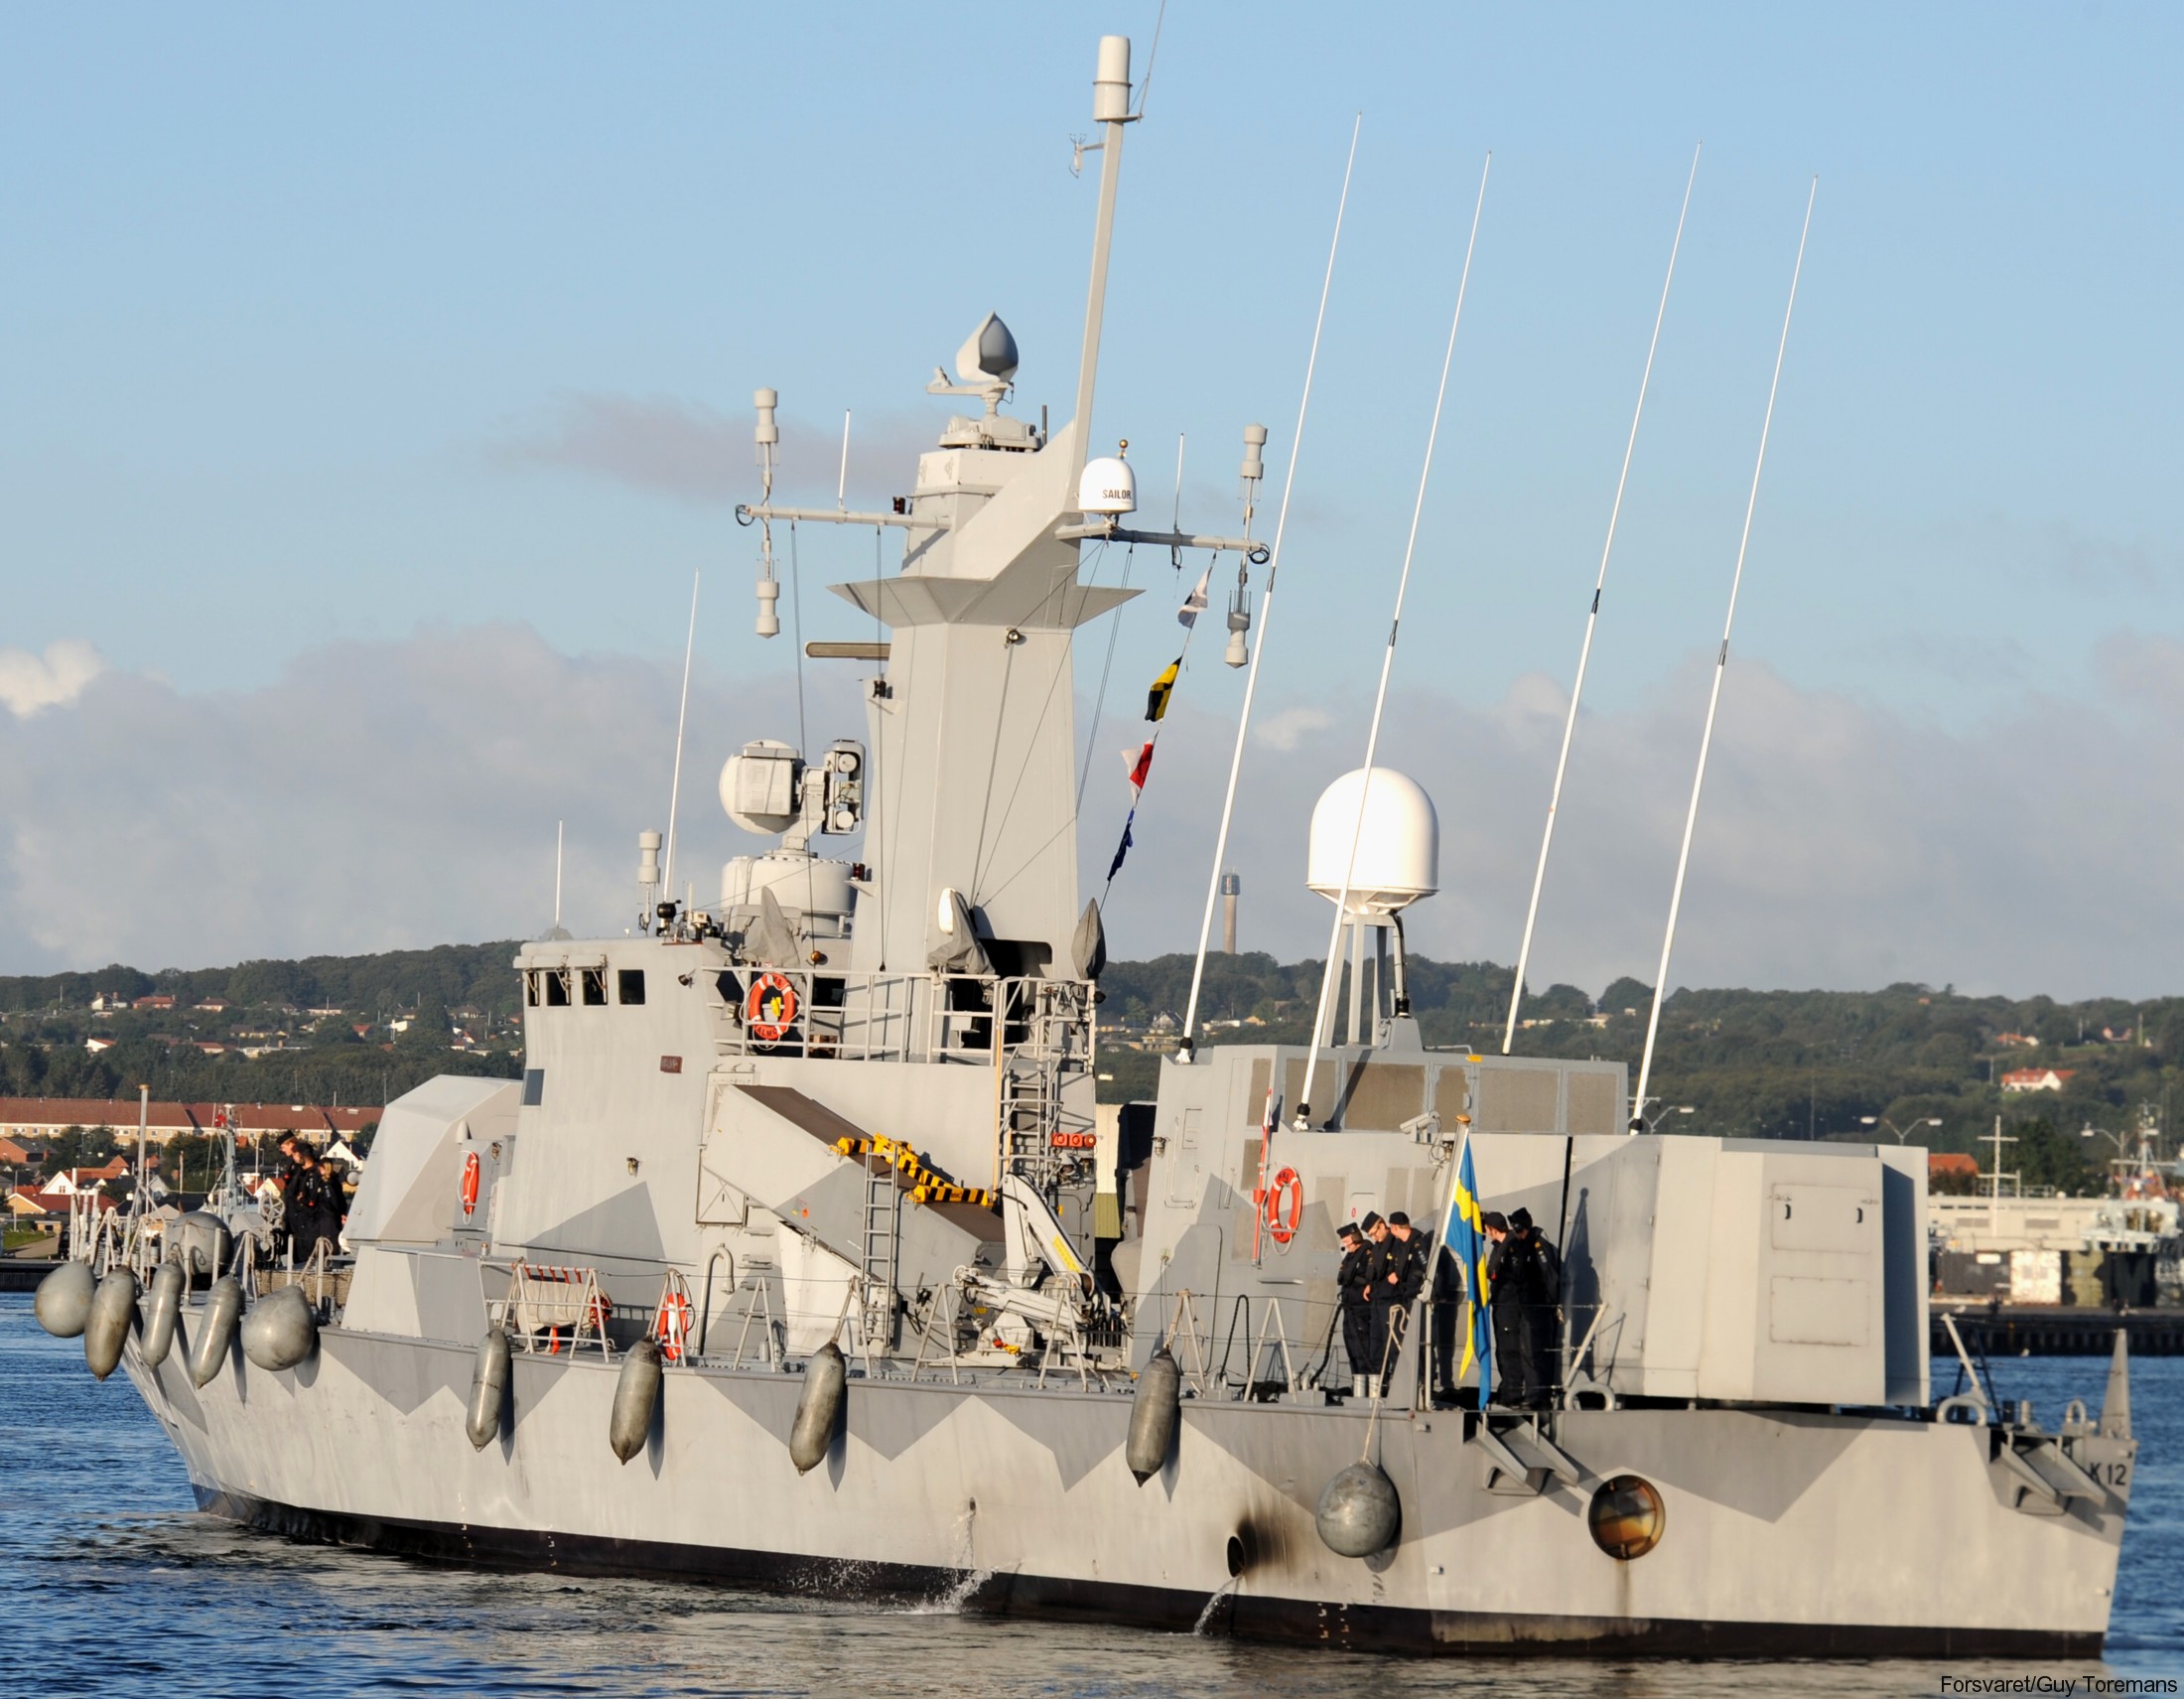 K12 P12 hswms malmö hms stockholm class corvette patrol vessel swedish navy svenska marinen forsvarsmakten 03